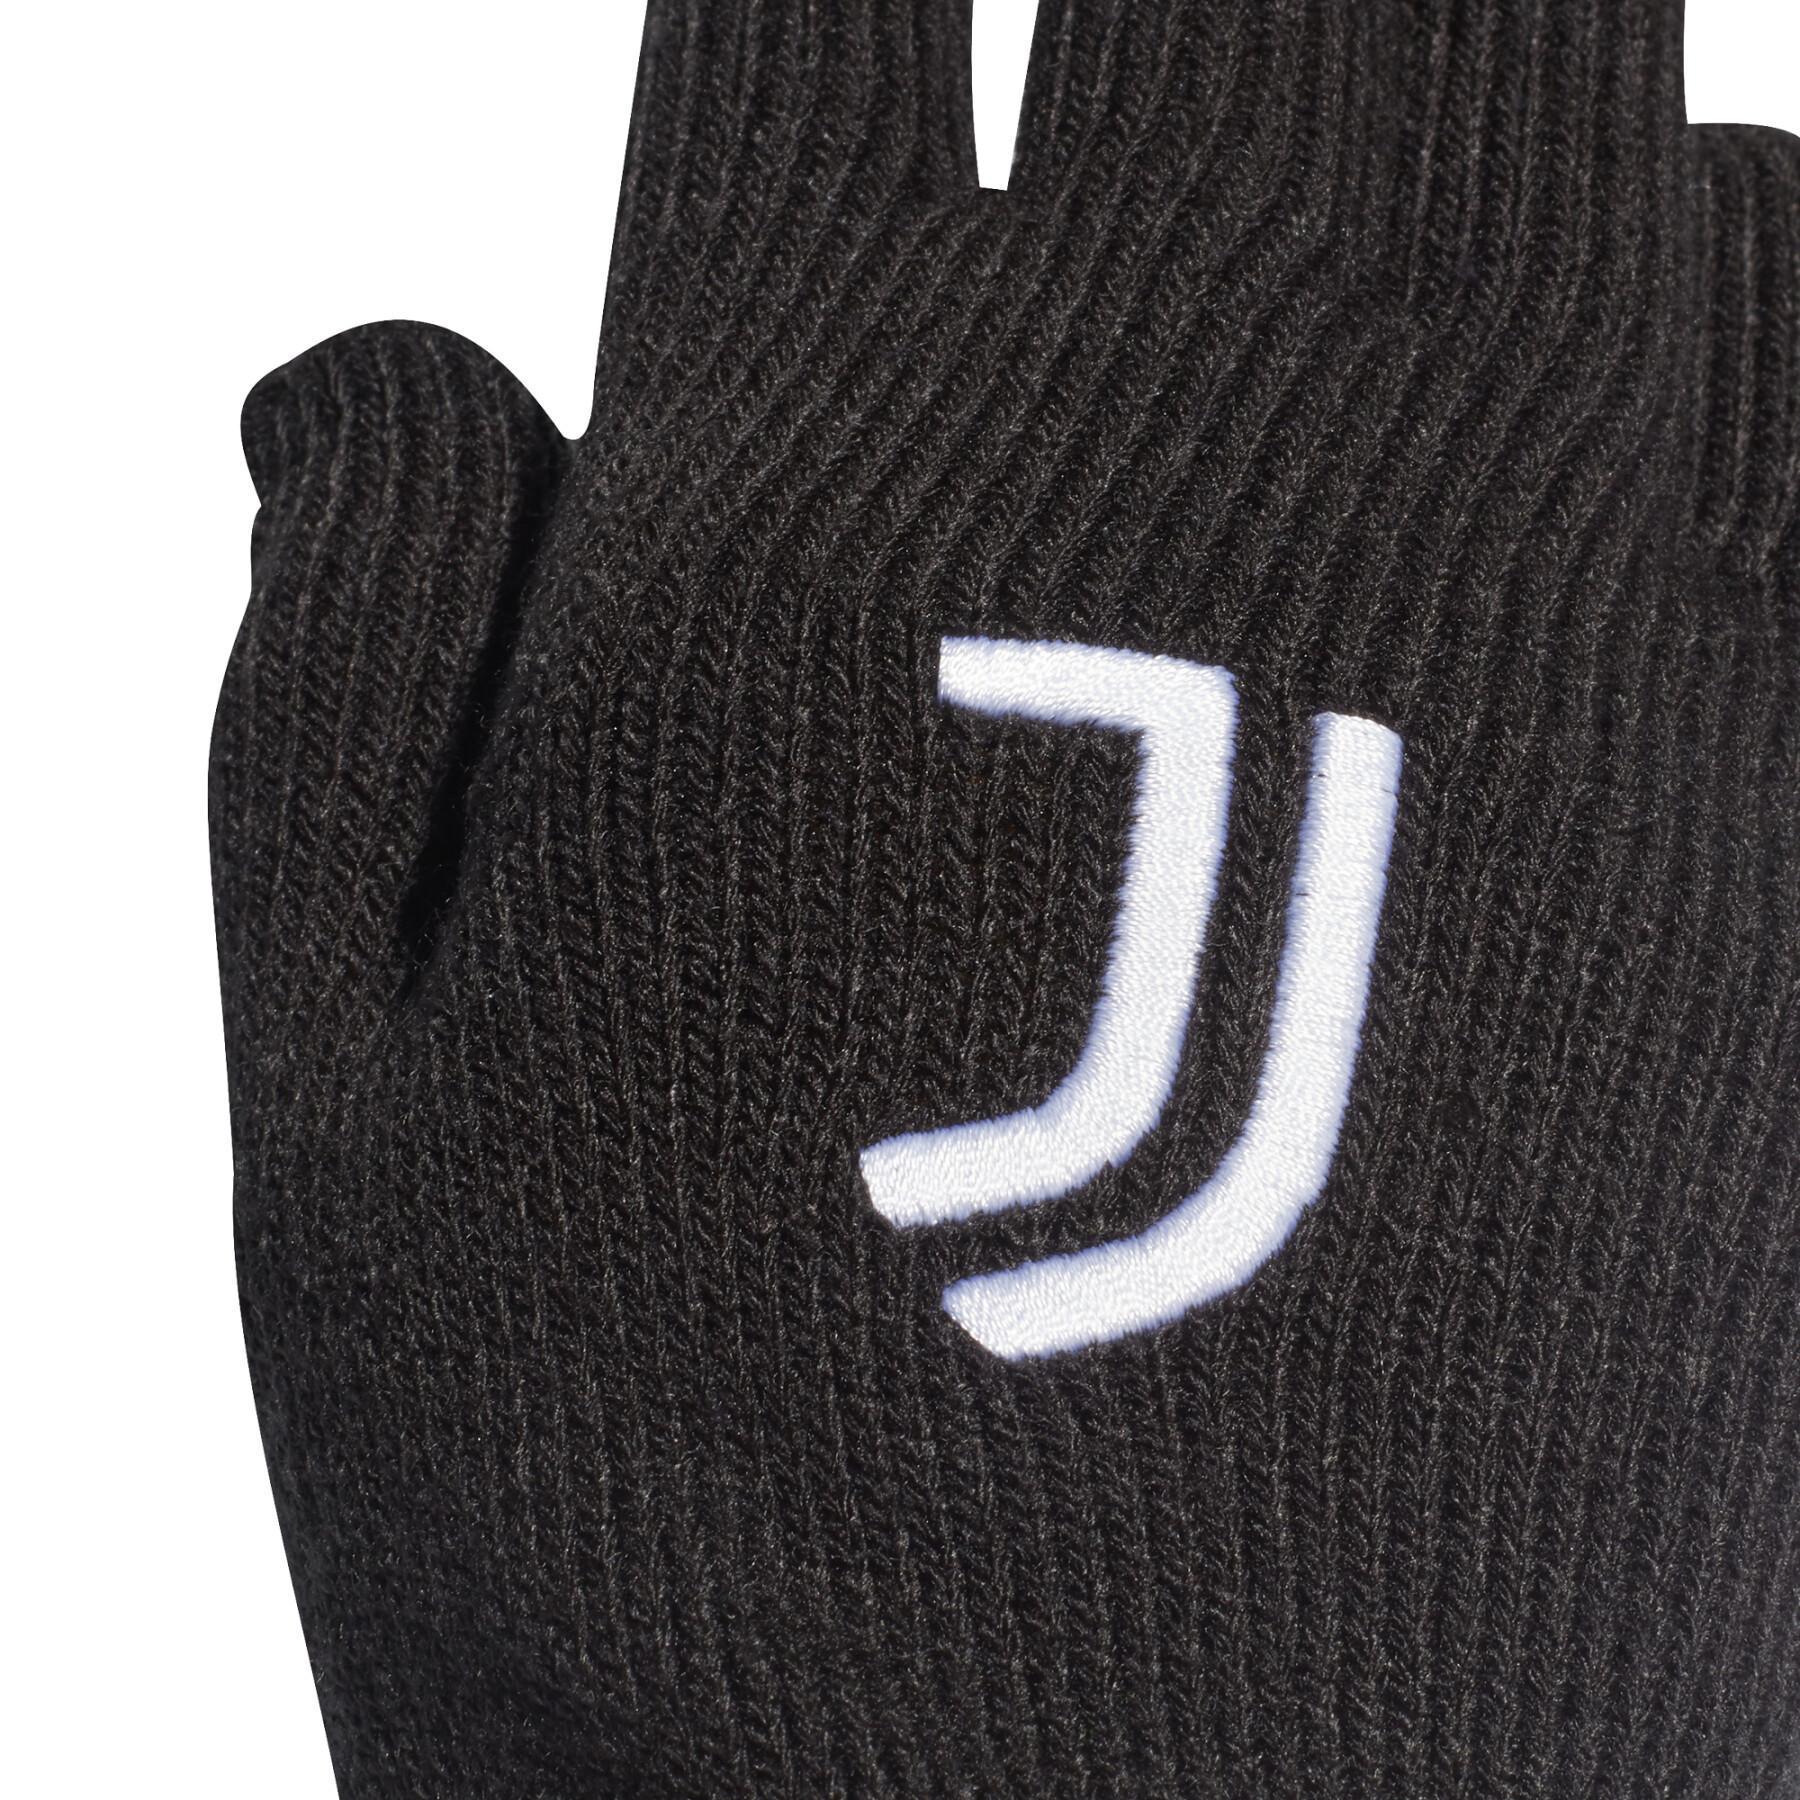 Handschuhe Juventus